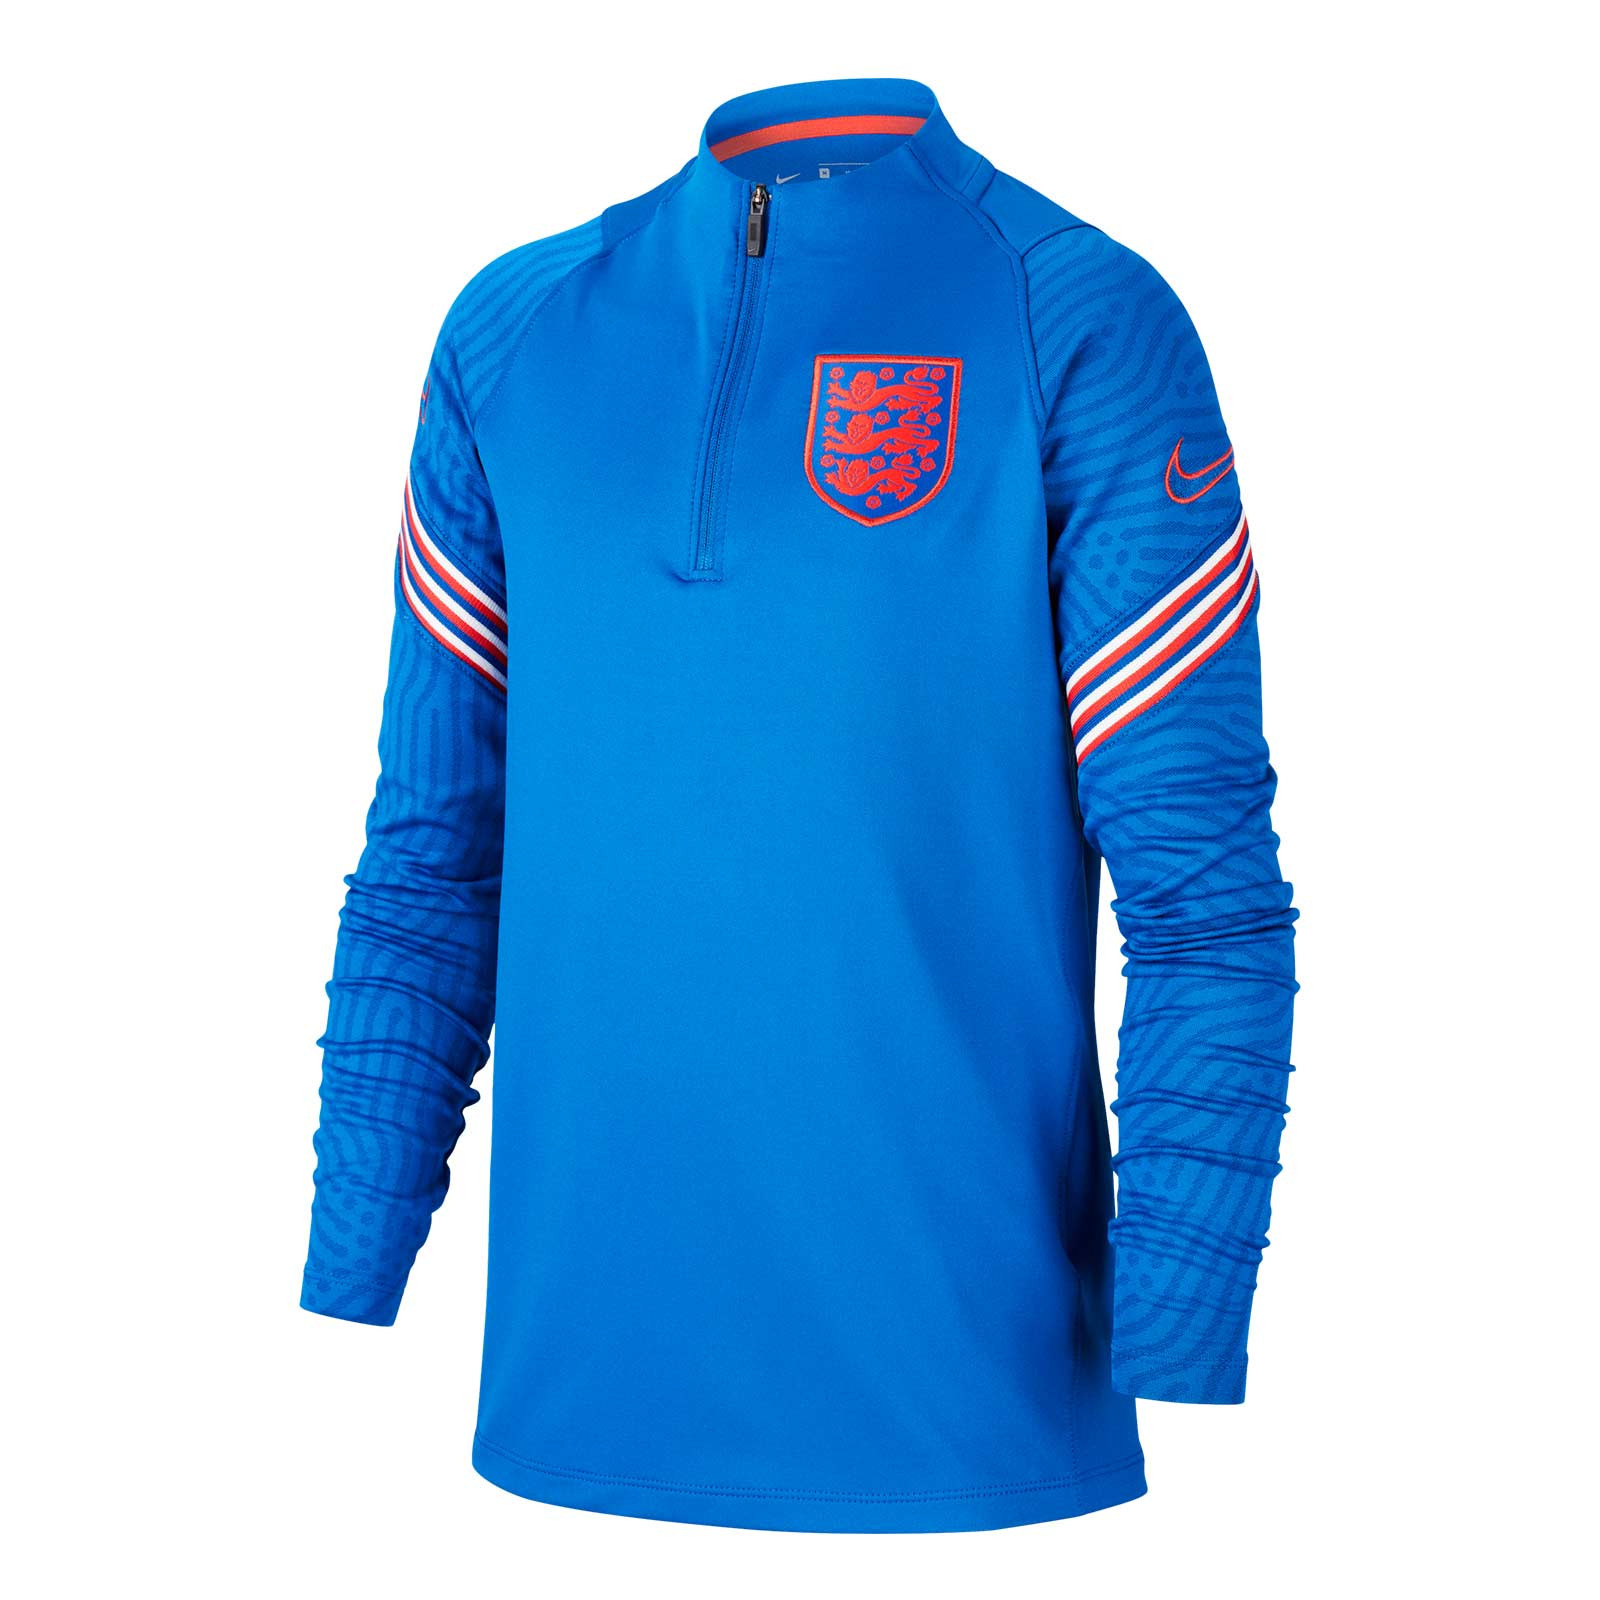 Chándal Nike Inglaterra 2020 2021 Strike azul